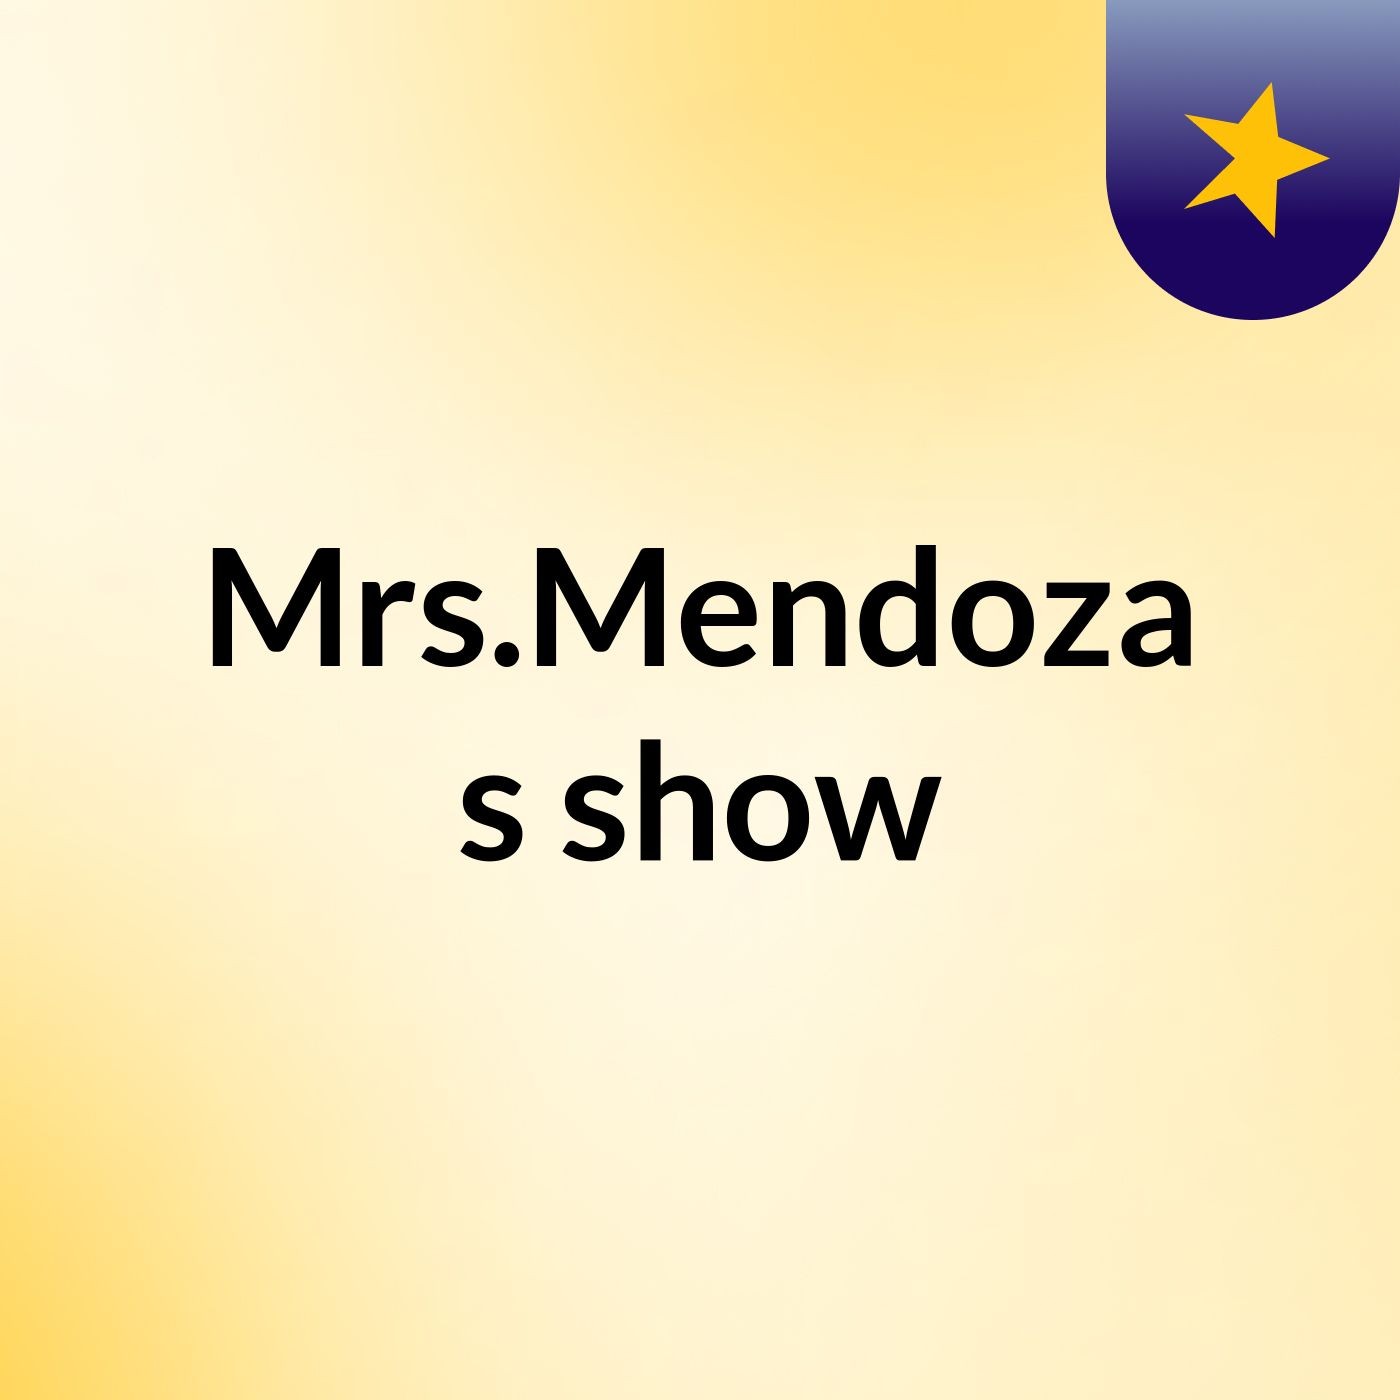 Mrs.Mendoza's show